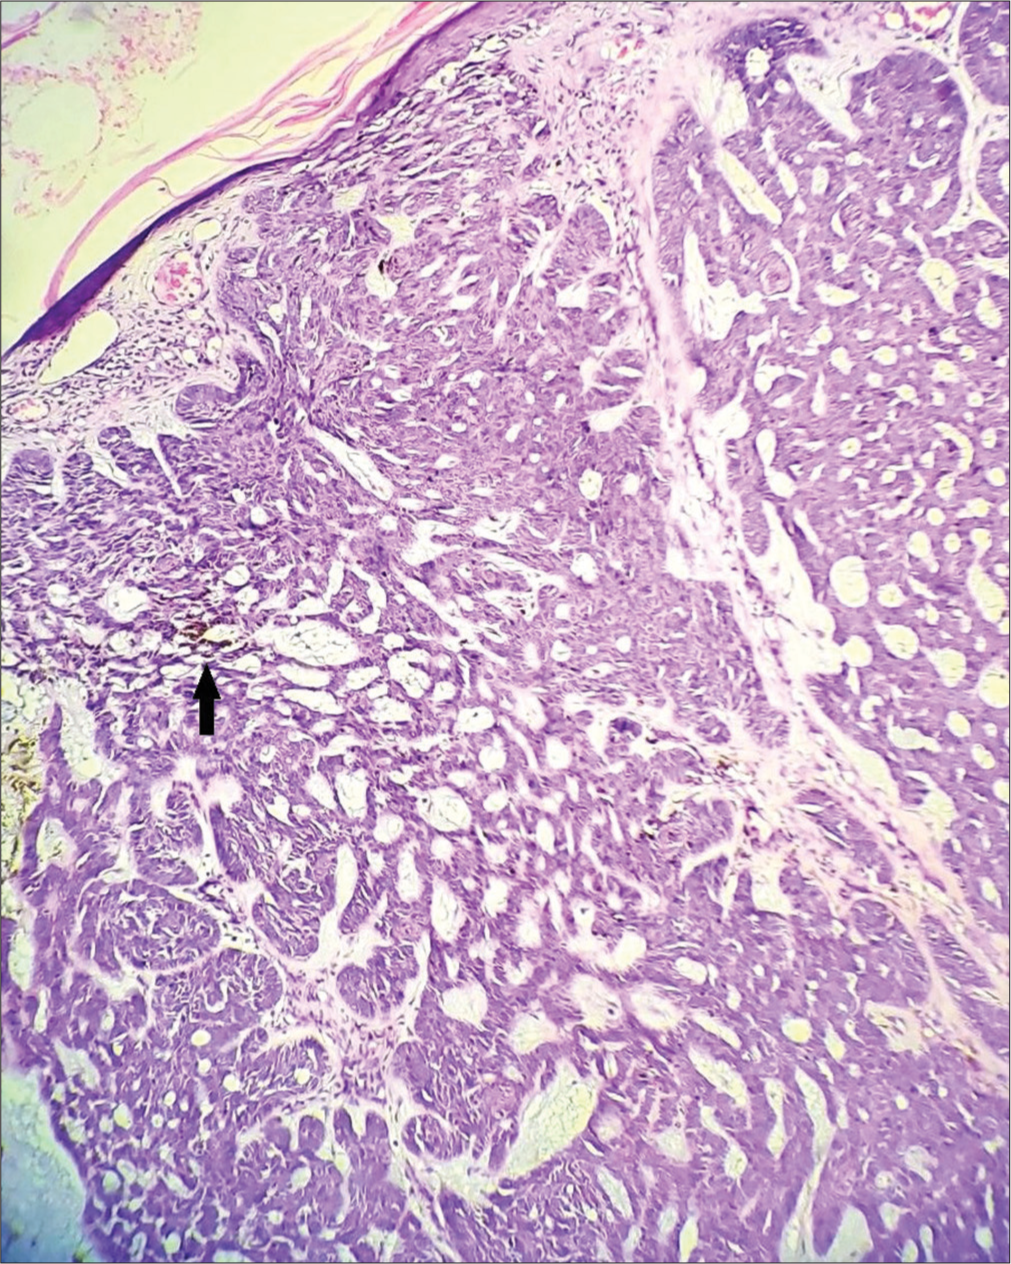 Islands of basaloid tumor cells in the dermis with melanin deposits (arrow), H & E × 100.